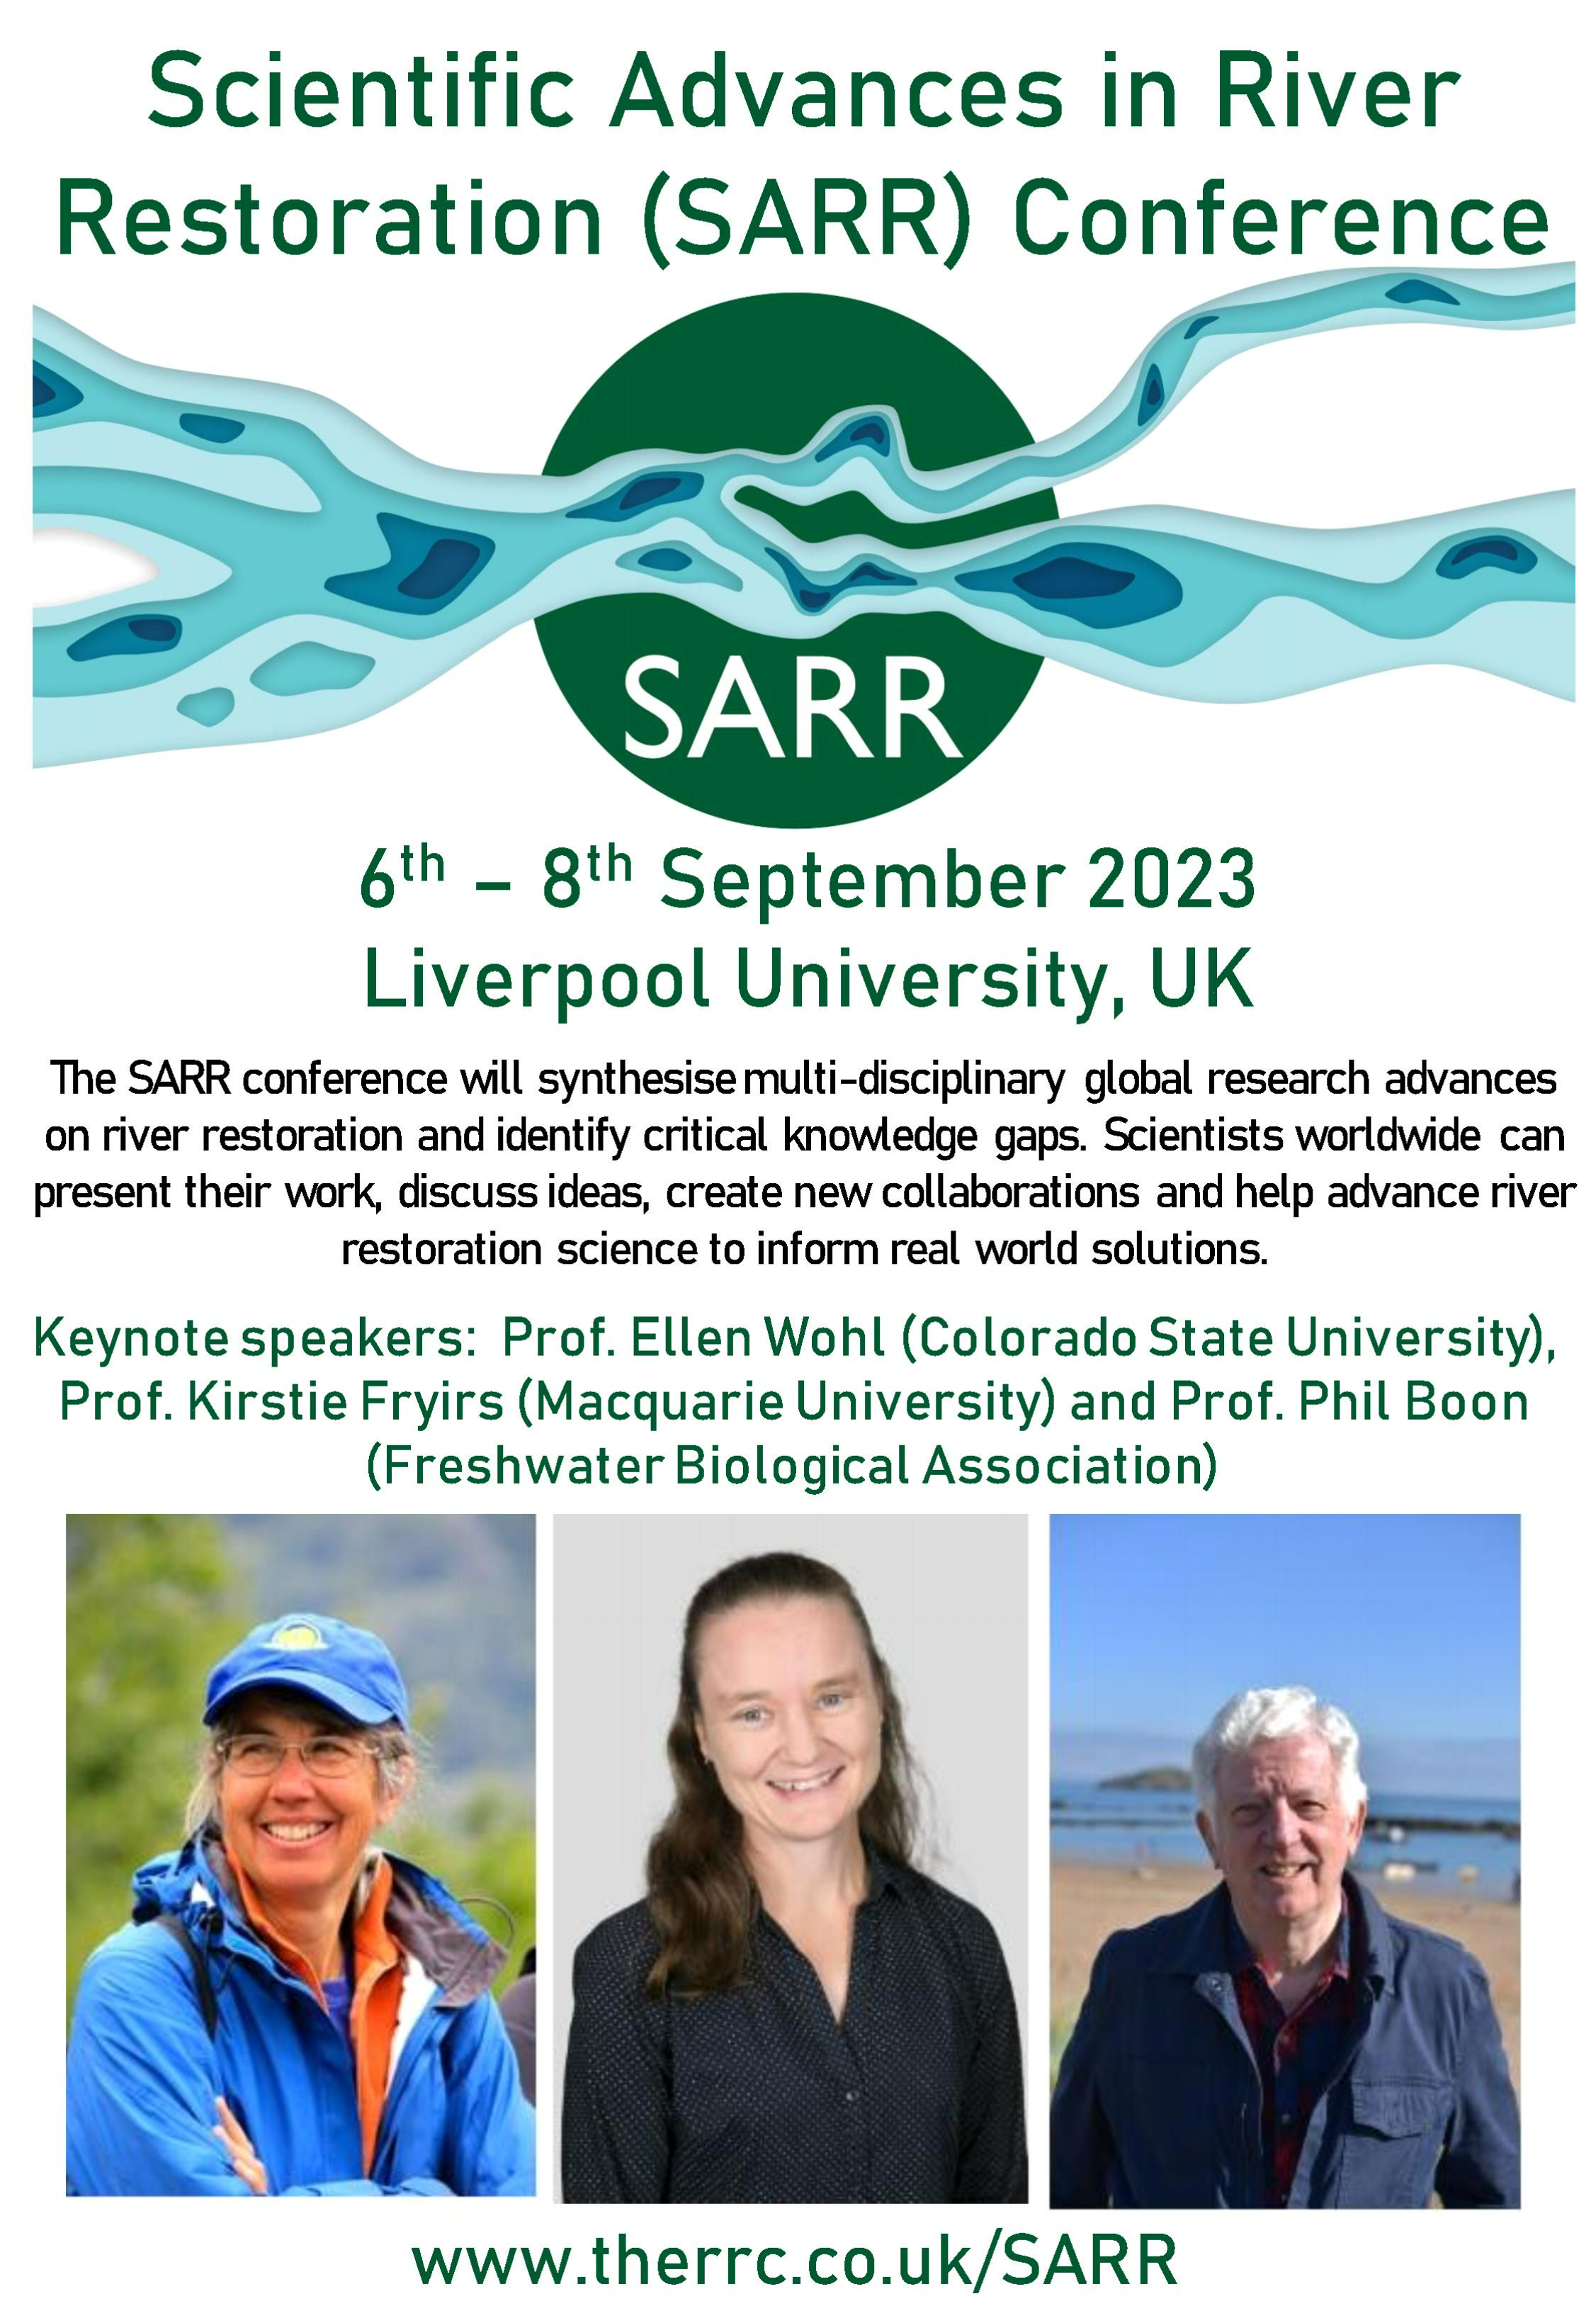 Scientific Advances in River Restoration International Conference